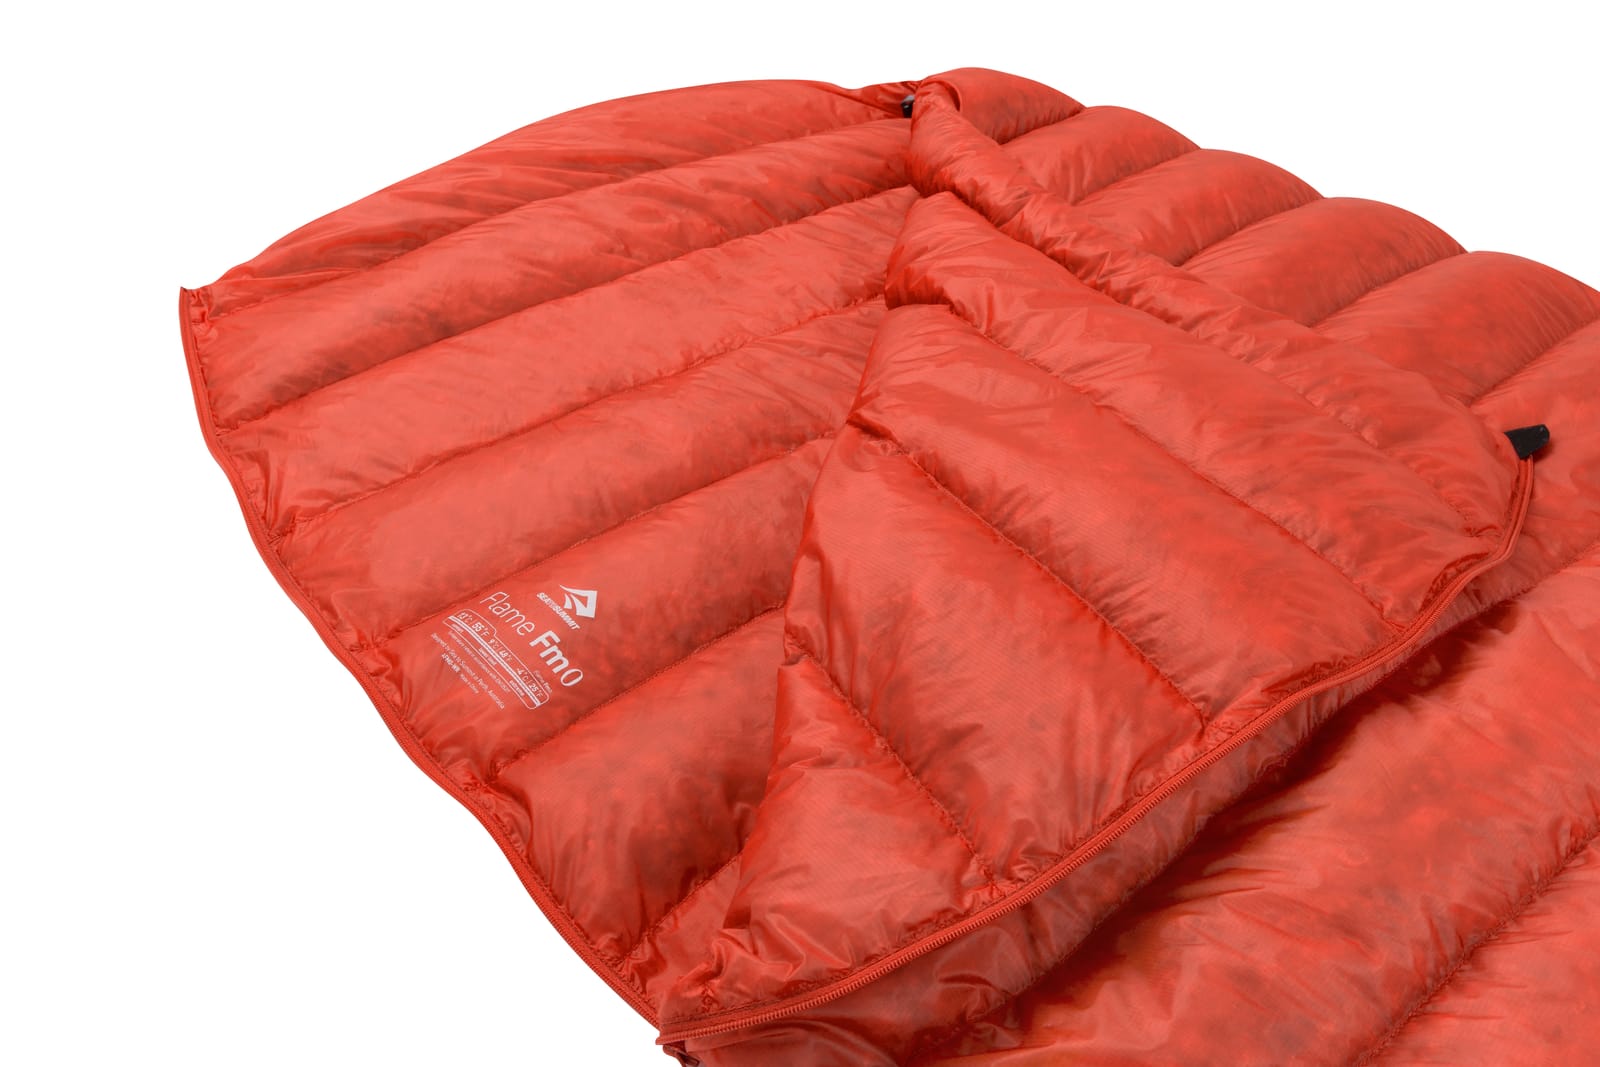 Sea to Summit Flame IV: A warm ultralight sleeping bag tailored